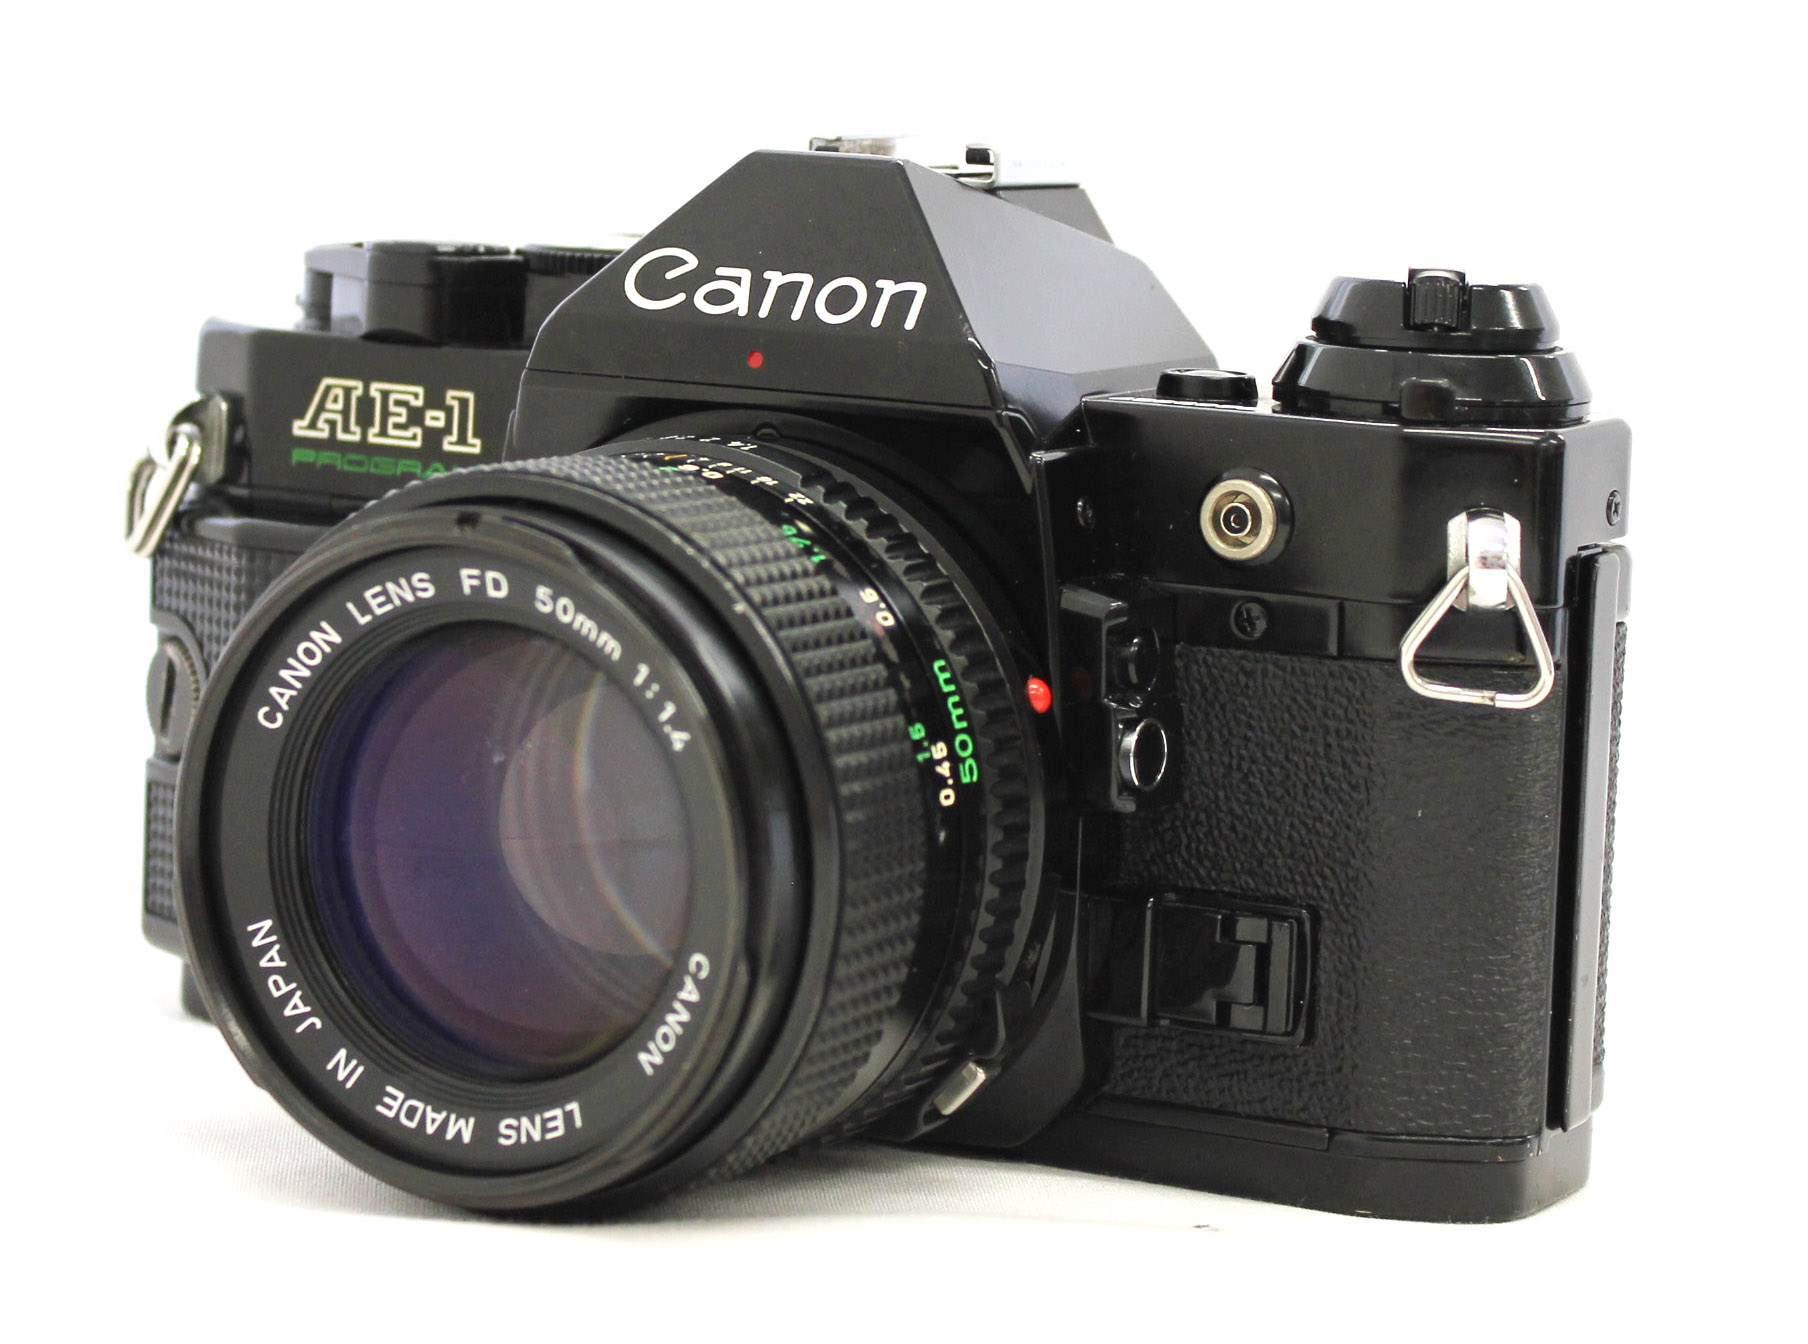 Canon AE-1 Program 35mm SLR Film Camera Black with New 50mm F/1.4 Lens from Japan (C1840) | Fish J-Camera (Big Fish J-Shop)